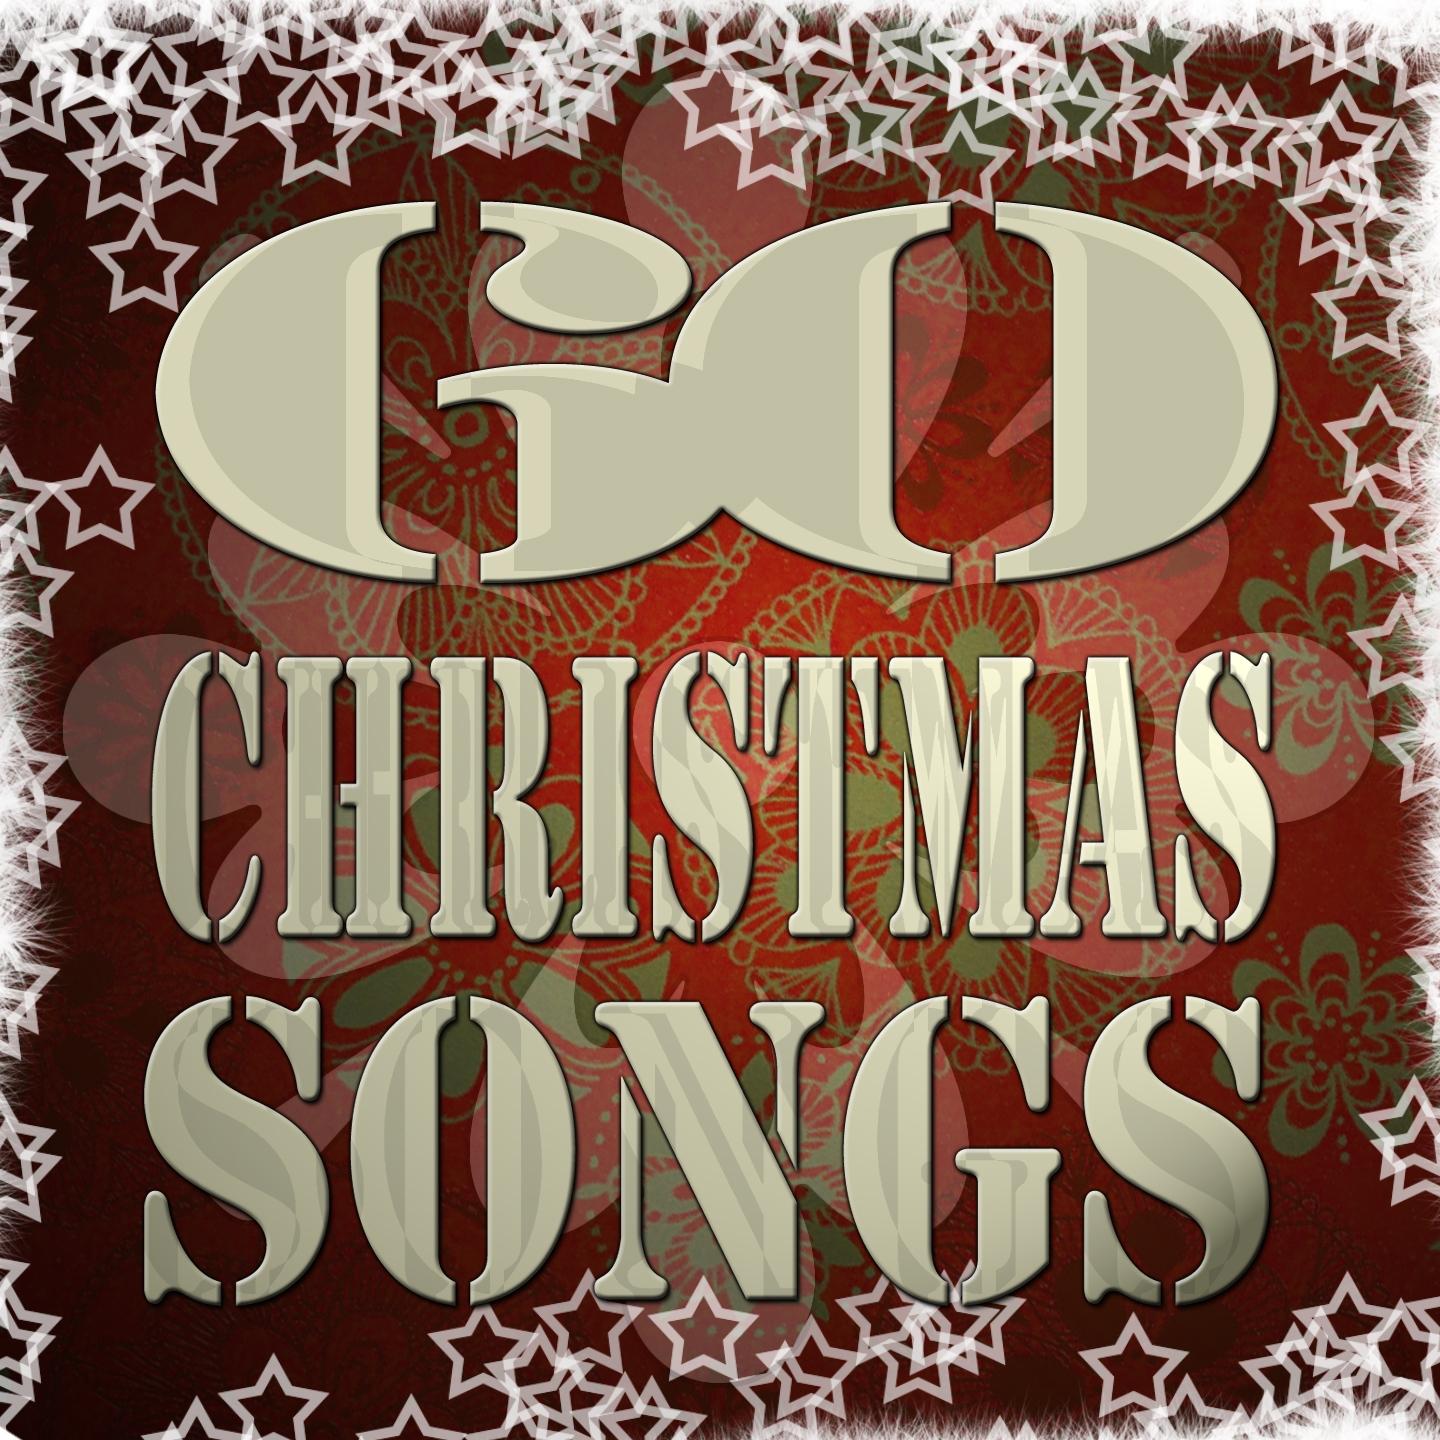 60 Christmas Songs (Original Remastered Version)